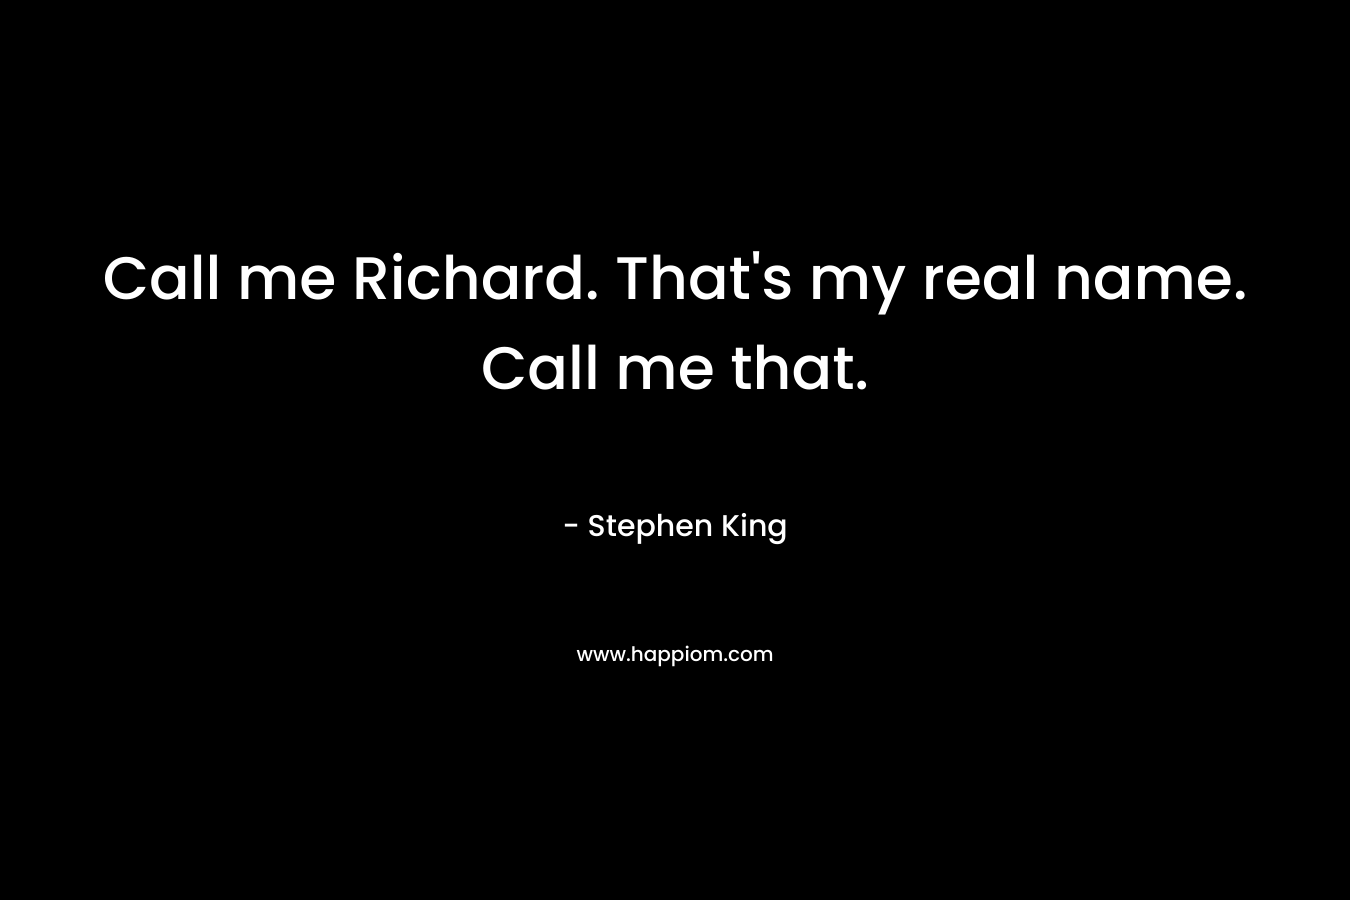 Call me Richard. That's my real name. Call me that.